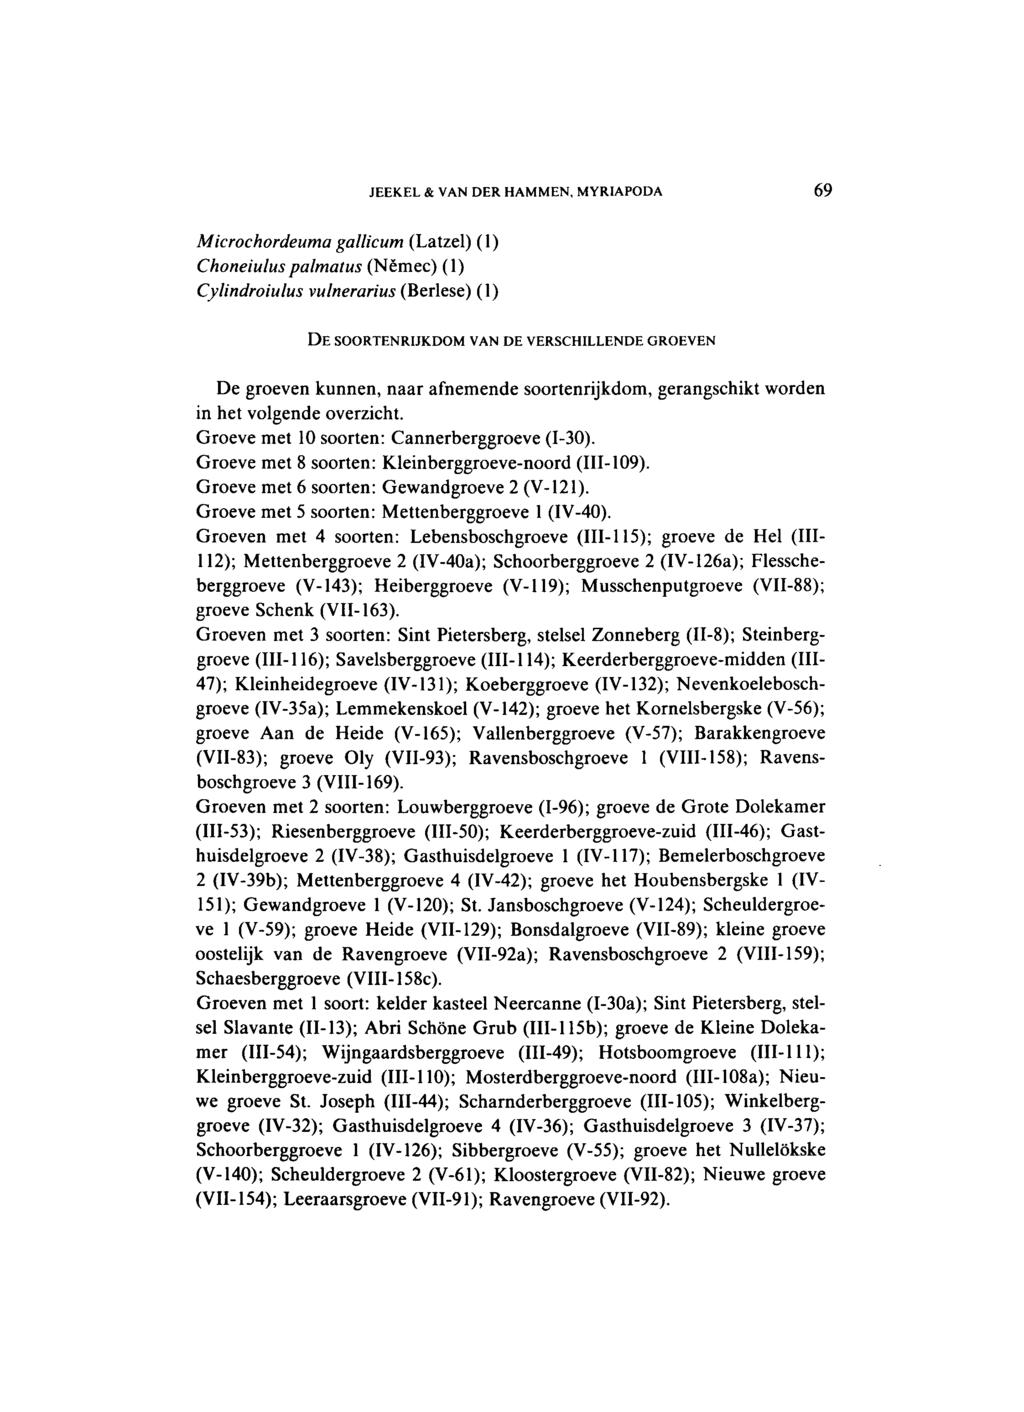 JEEKEL & VAN DER HAMMEN, MYRIAPODA 69 Microchordeuma gallicum (Latzel) (1) Choneiulus palmatus (Nêmec) (1) Cylindroiulus vulnerarius (Berlese) (1) DE SOORTENRIJKDOM VAN DE VERSCHILLENDE GROEVEN De